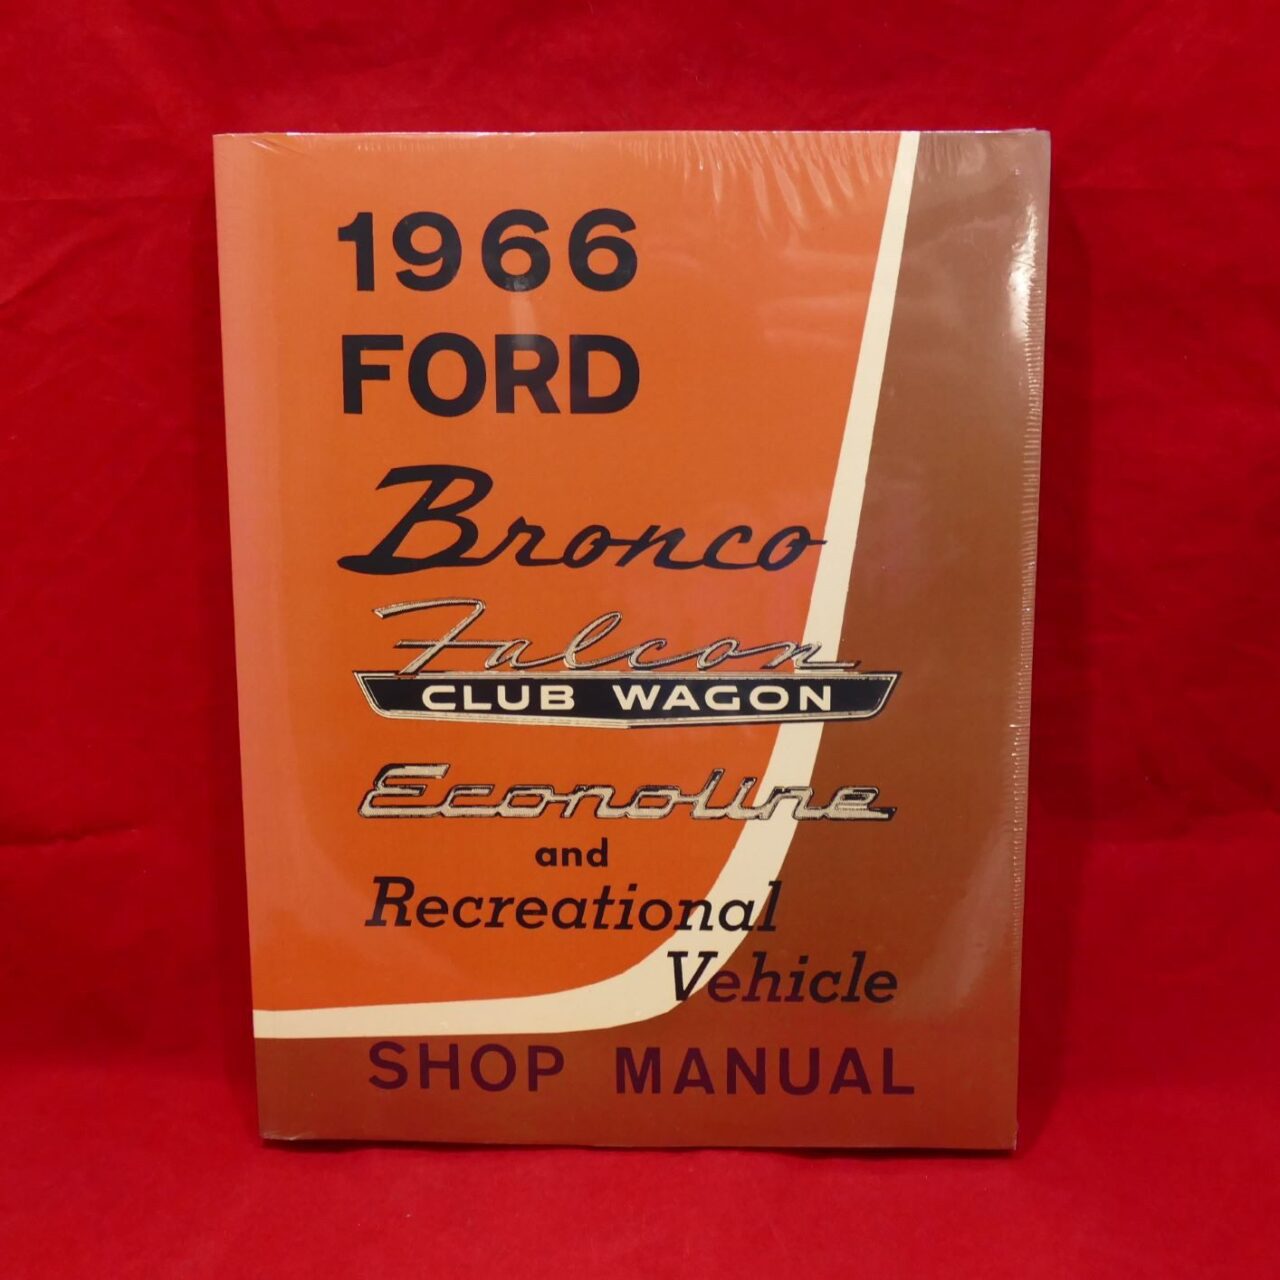 1966 Ford Bronco Shop Manual